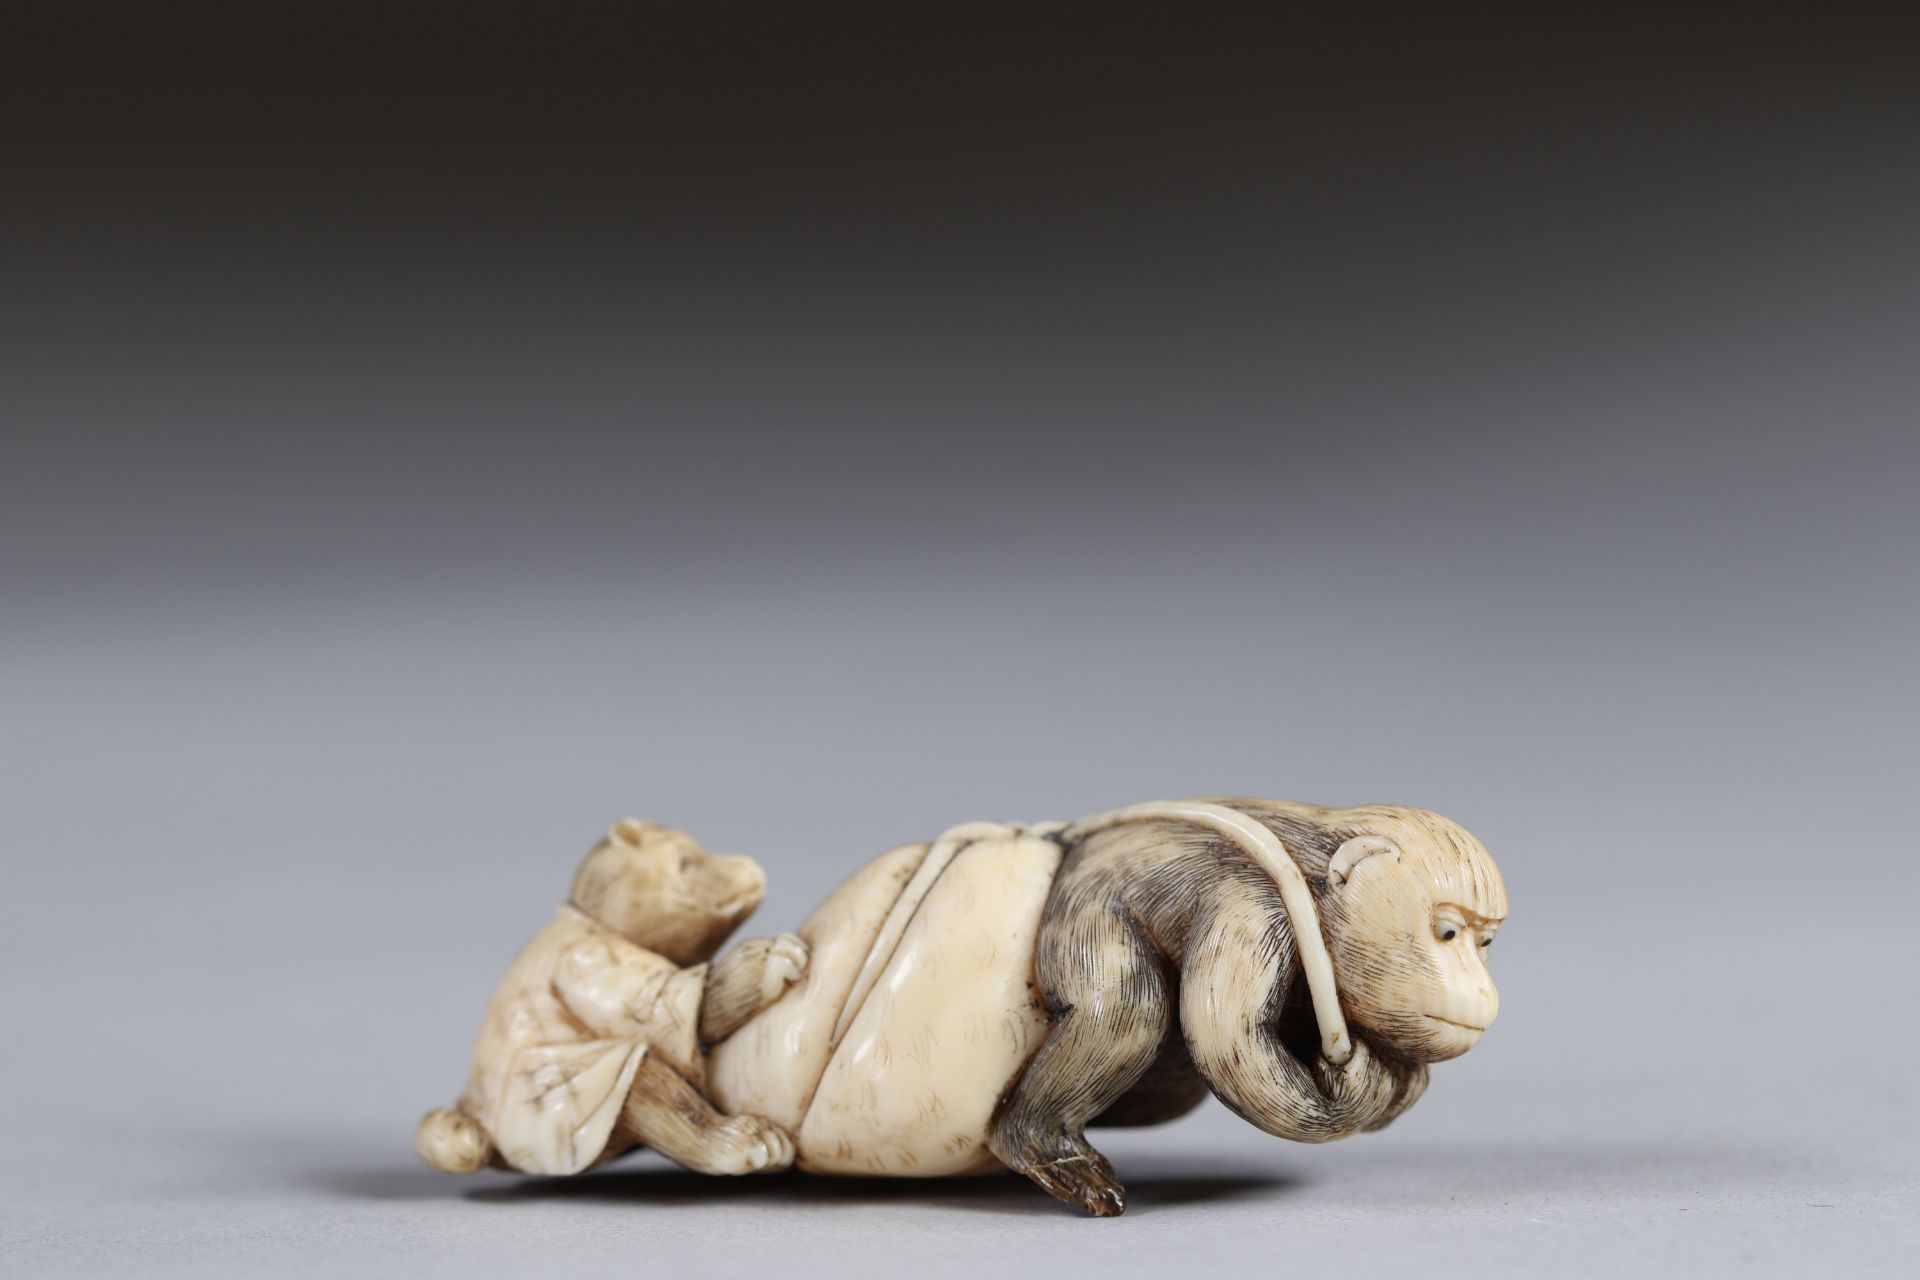 Netsuke carved - a monkey pulling a bag and a teddy bear. Japan Meiji period around 1900